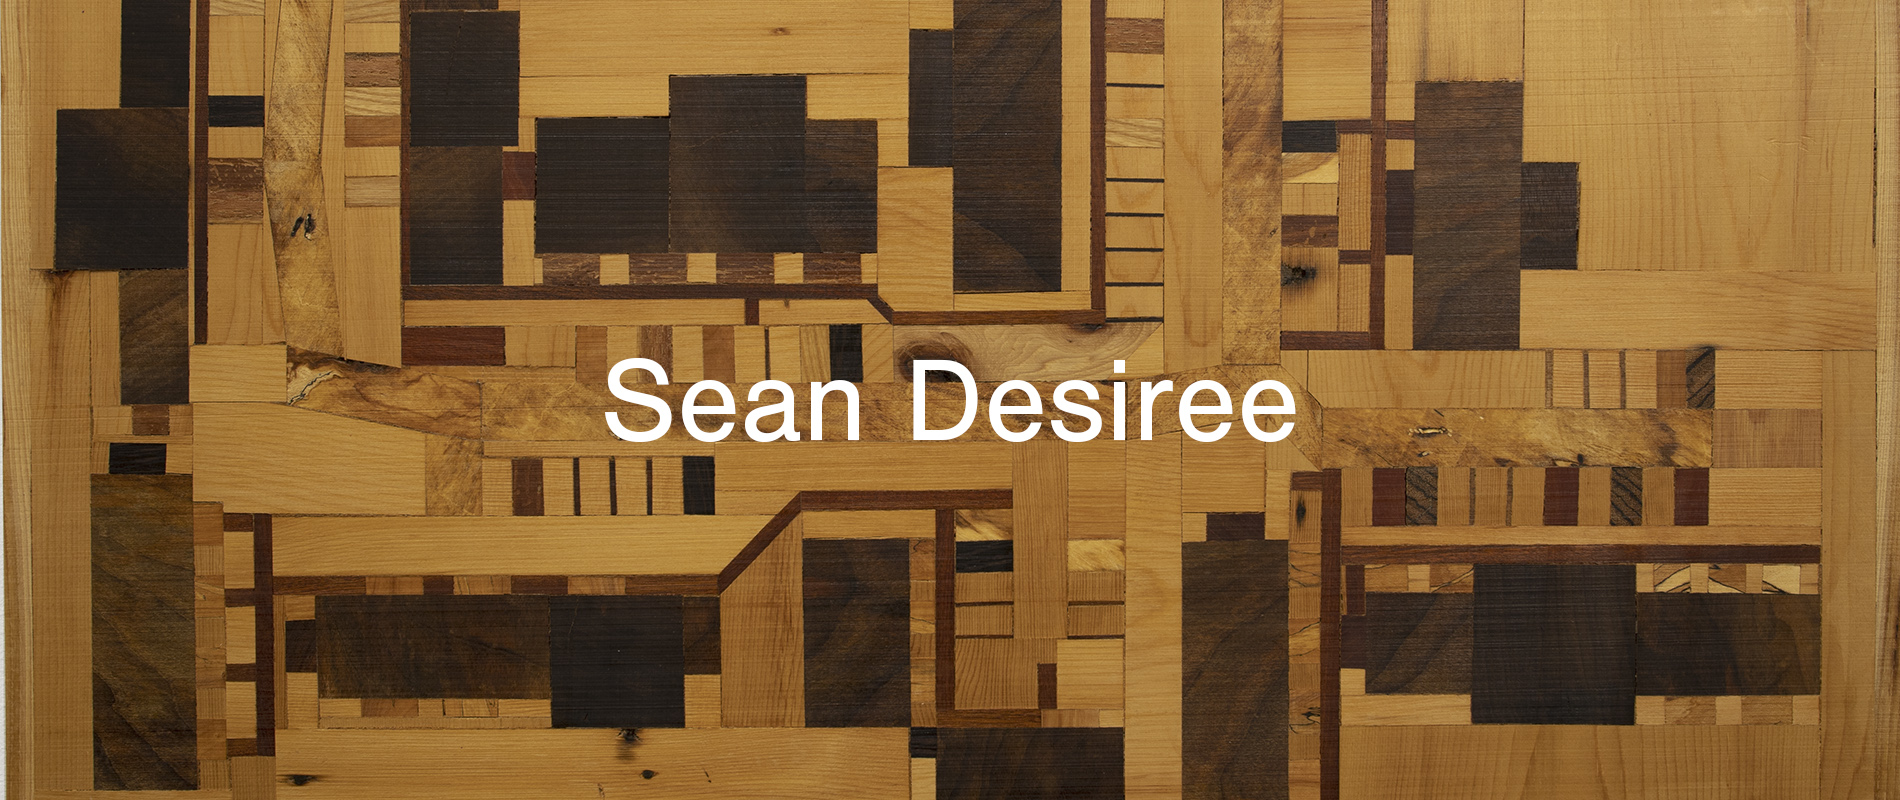 Sean Desiree